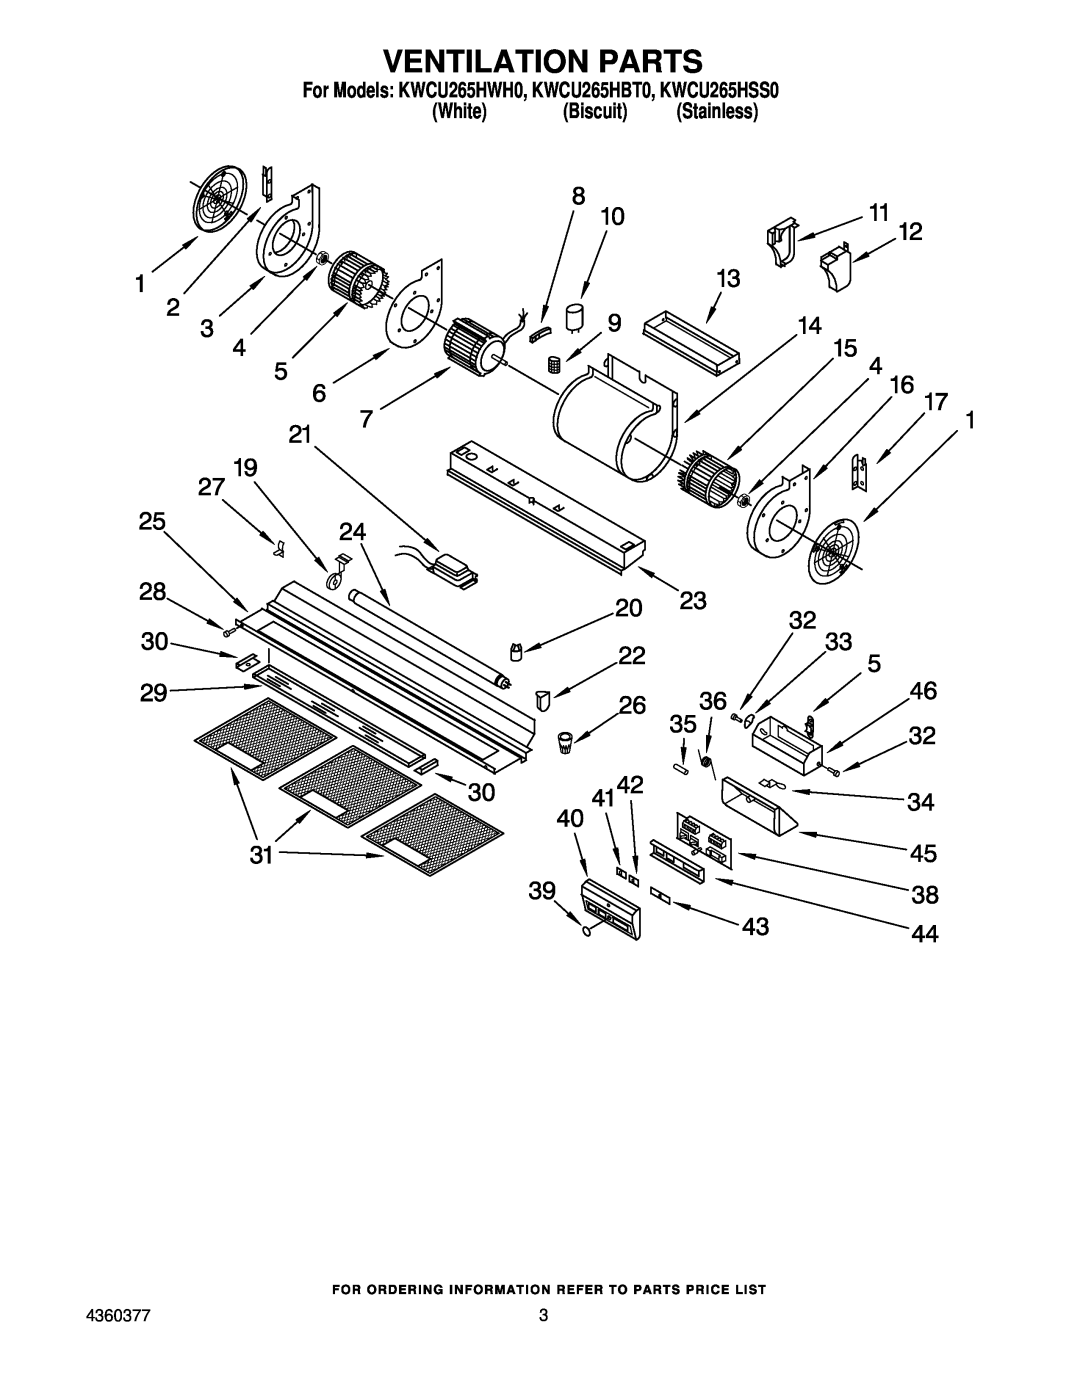 KitchenAid manual Ventilation Parts, For Models KWCU265HWH0, KWCU265HBT0, KWCU265HSS0, White, Biscuit, Stainless 